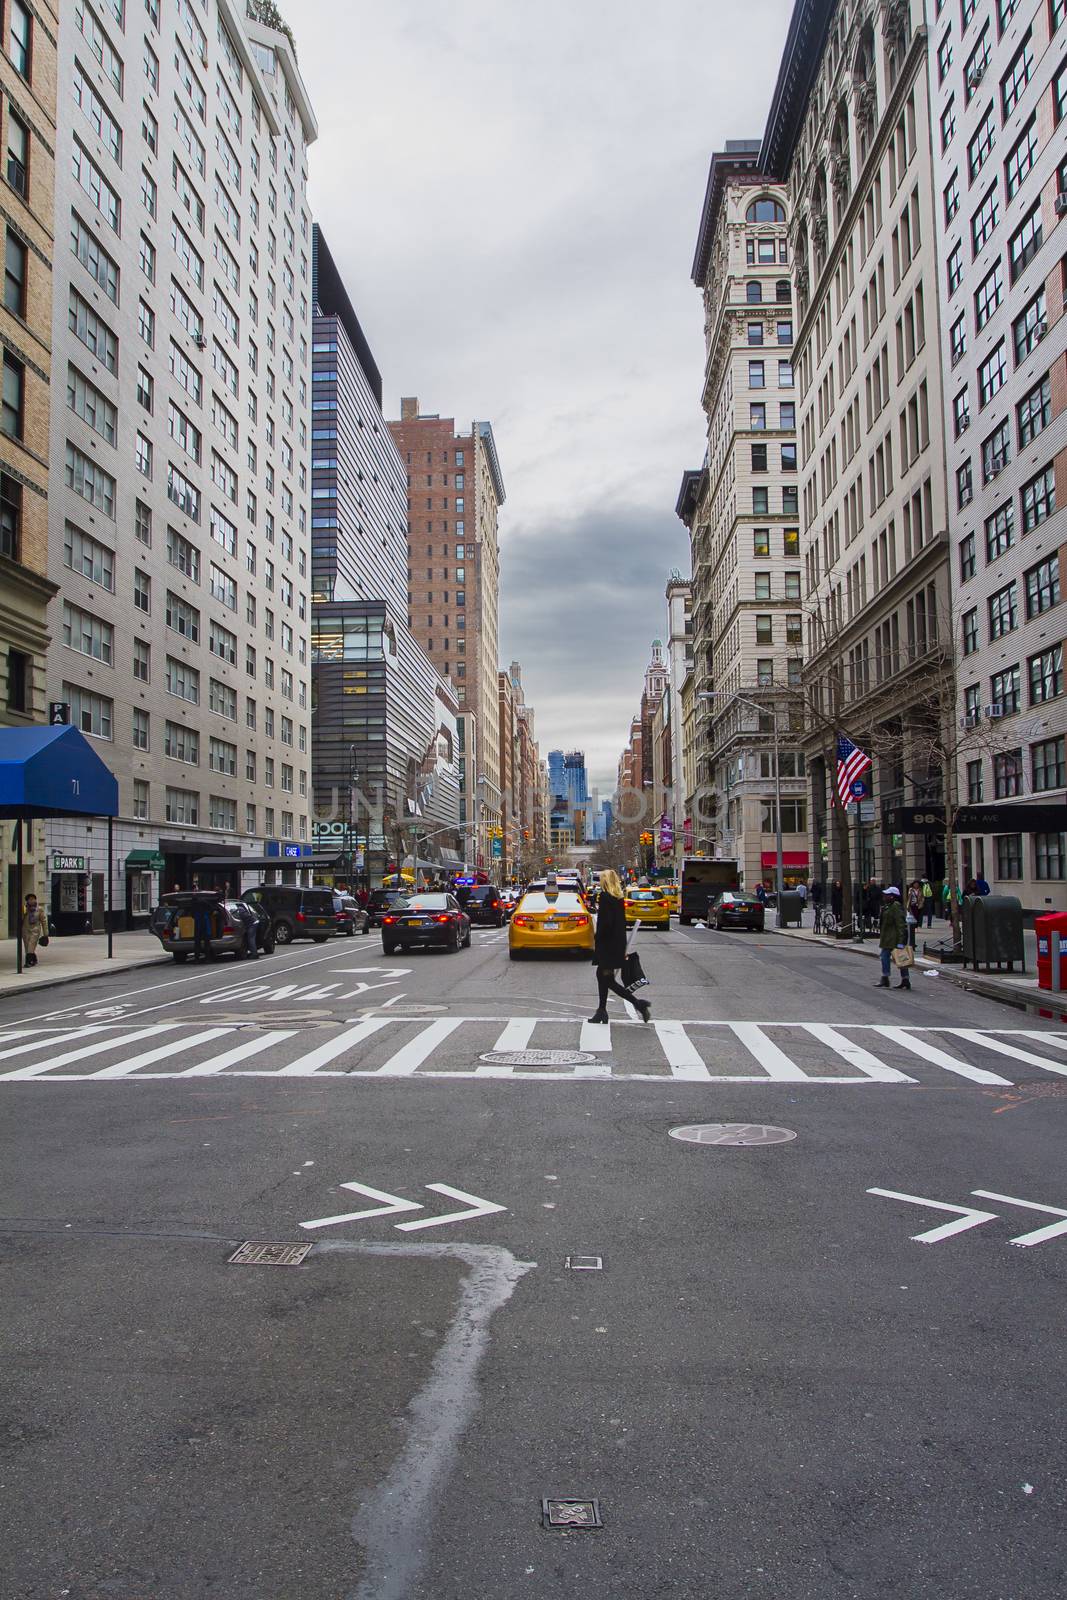 Street of New York city by mypstudio